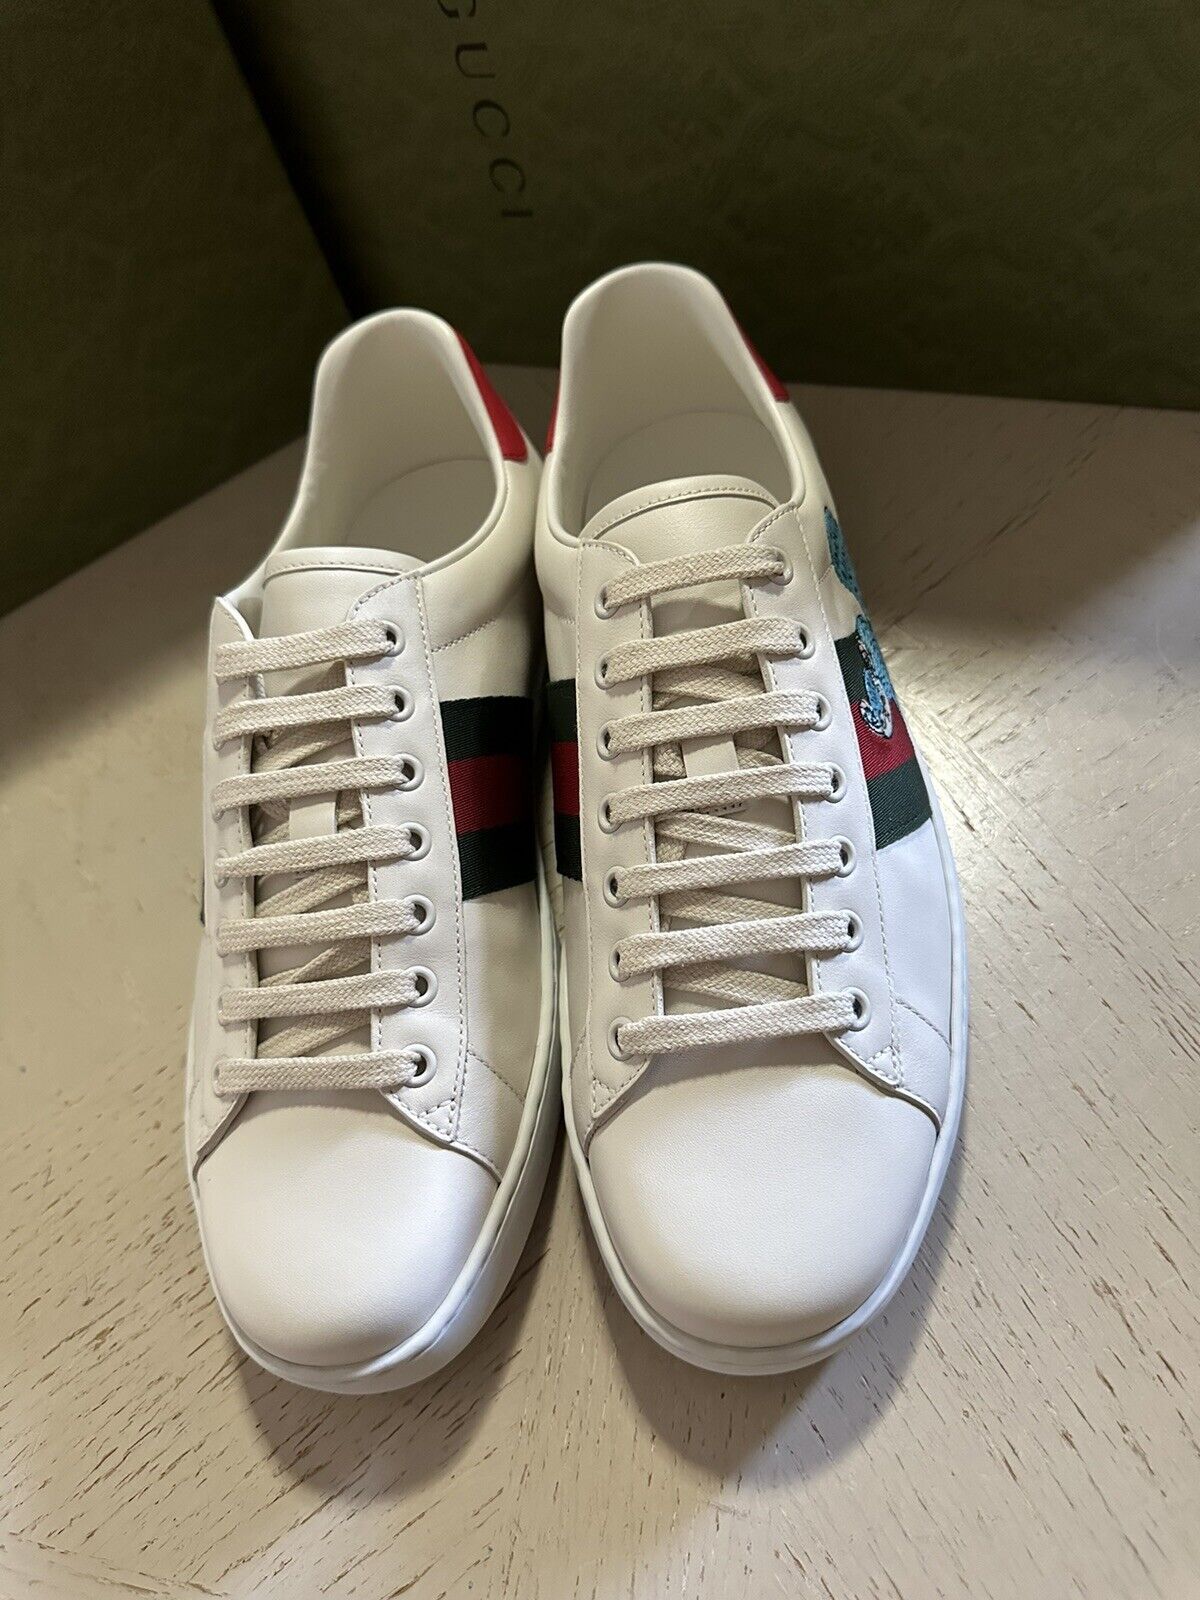 New Gucci Men Leather Freya Hartas Ace Sneaker Shoes White/Nat 9 US/8 UK 659219